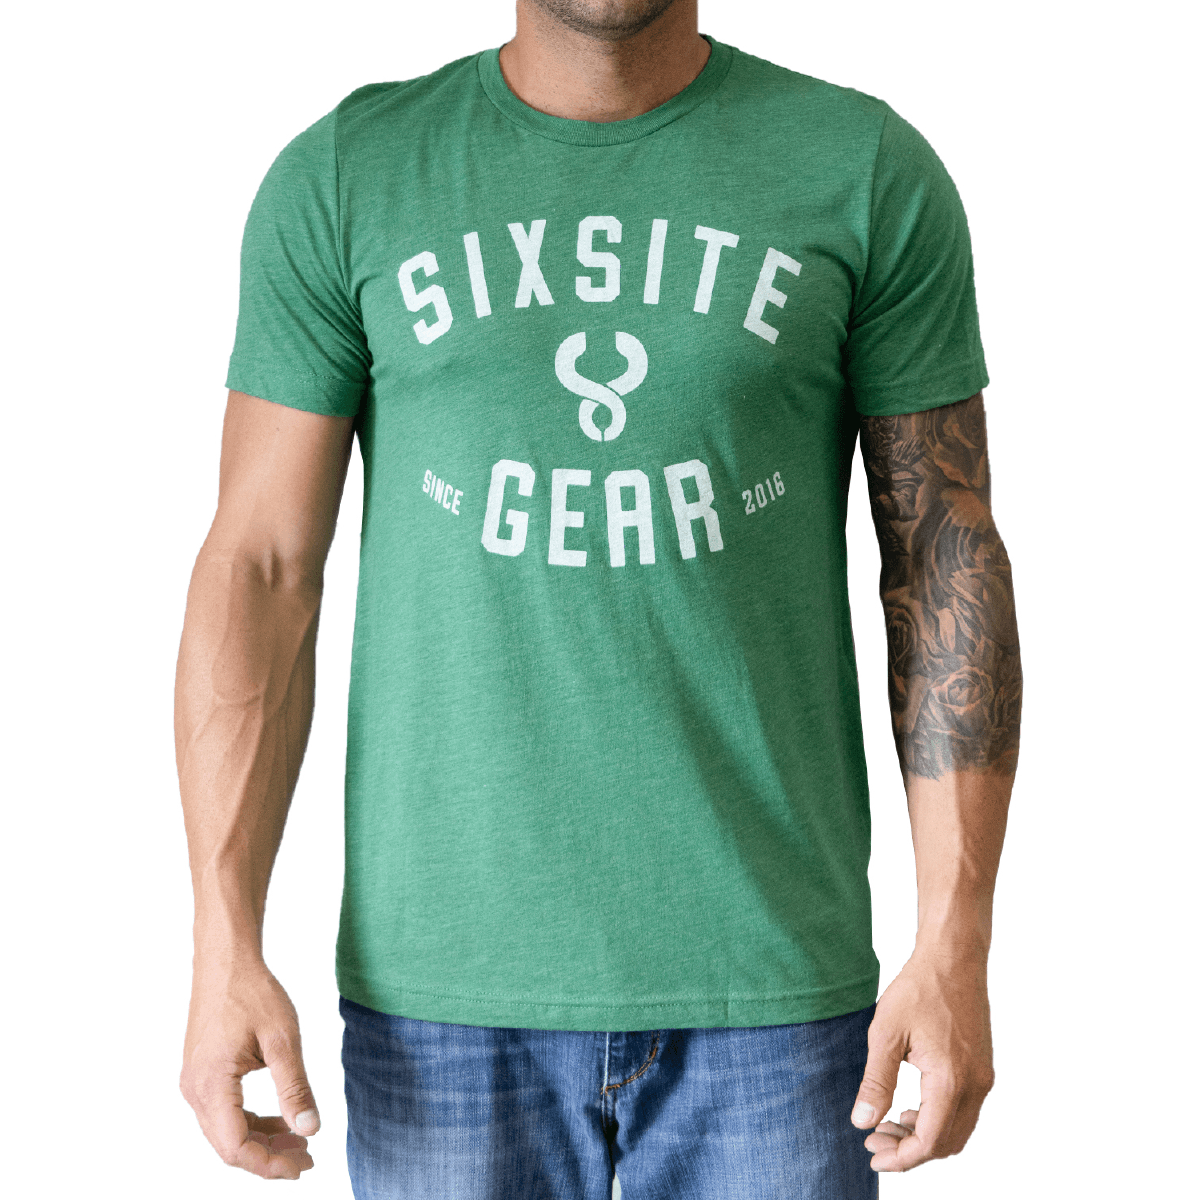 Classic SIXSITE T-Shirt